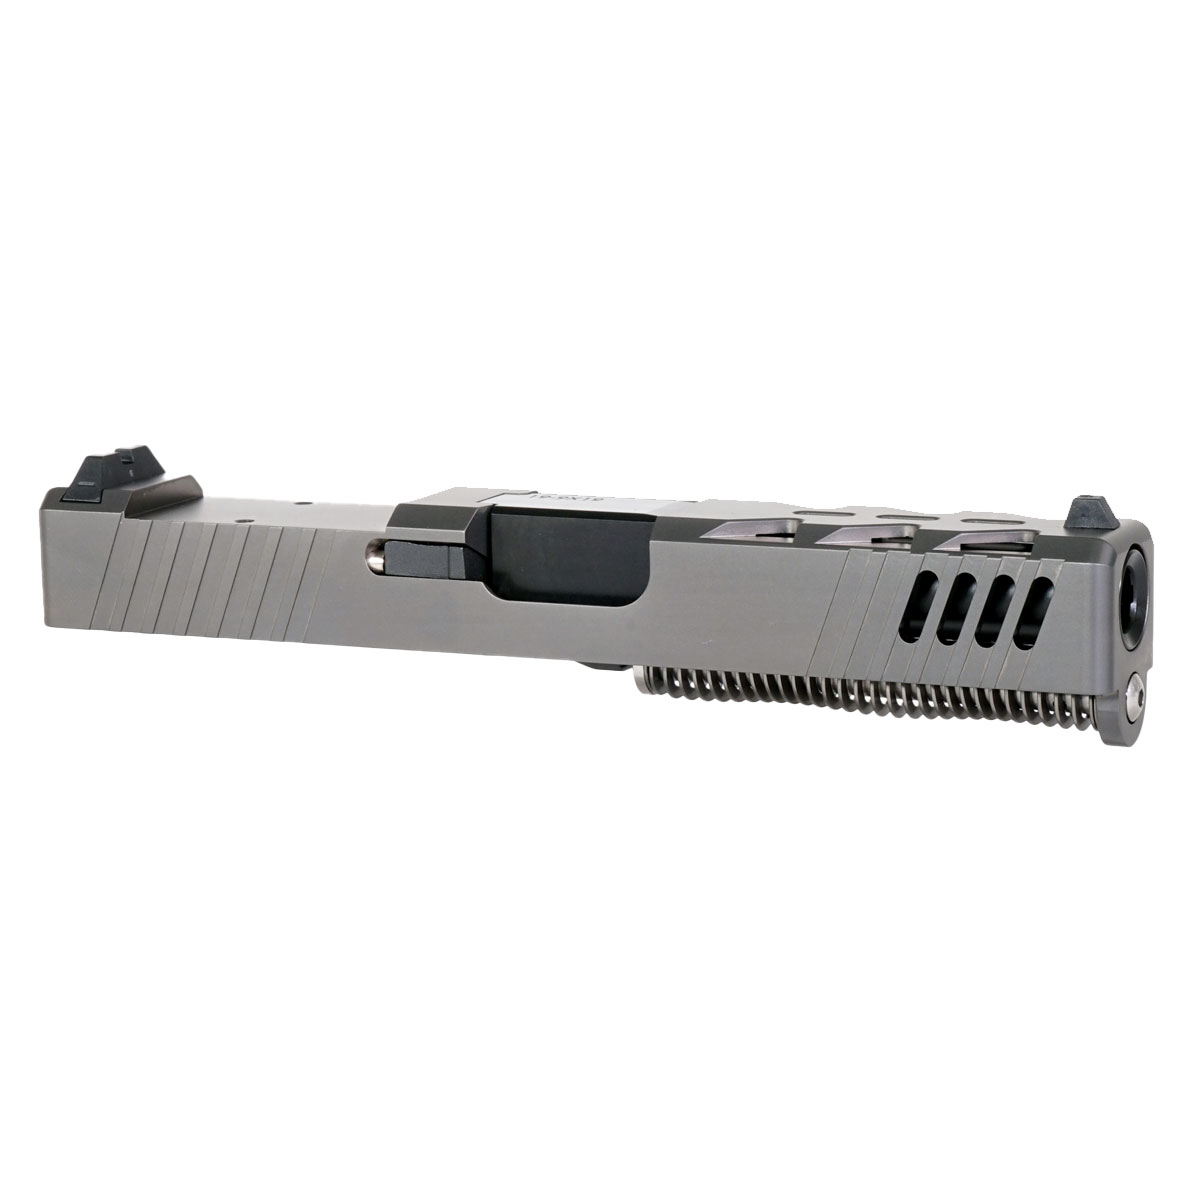 DTT 'The Rock' 9mm Complete Slide Kit - Glock 19 Gen 1-3 Compatible